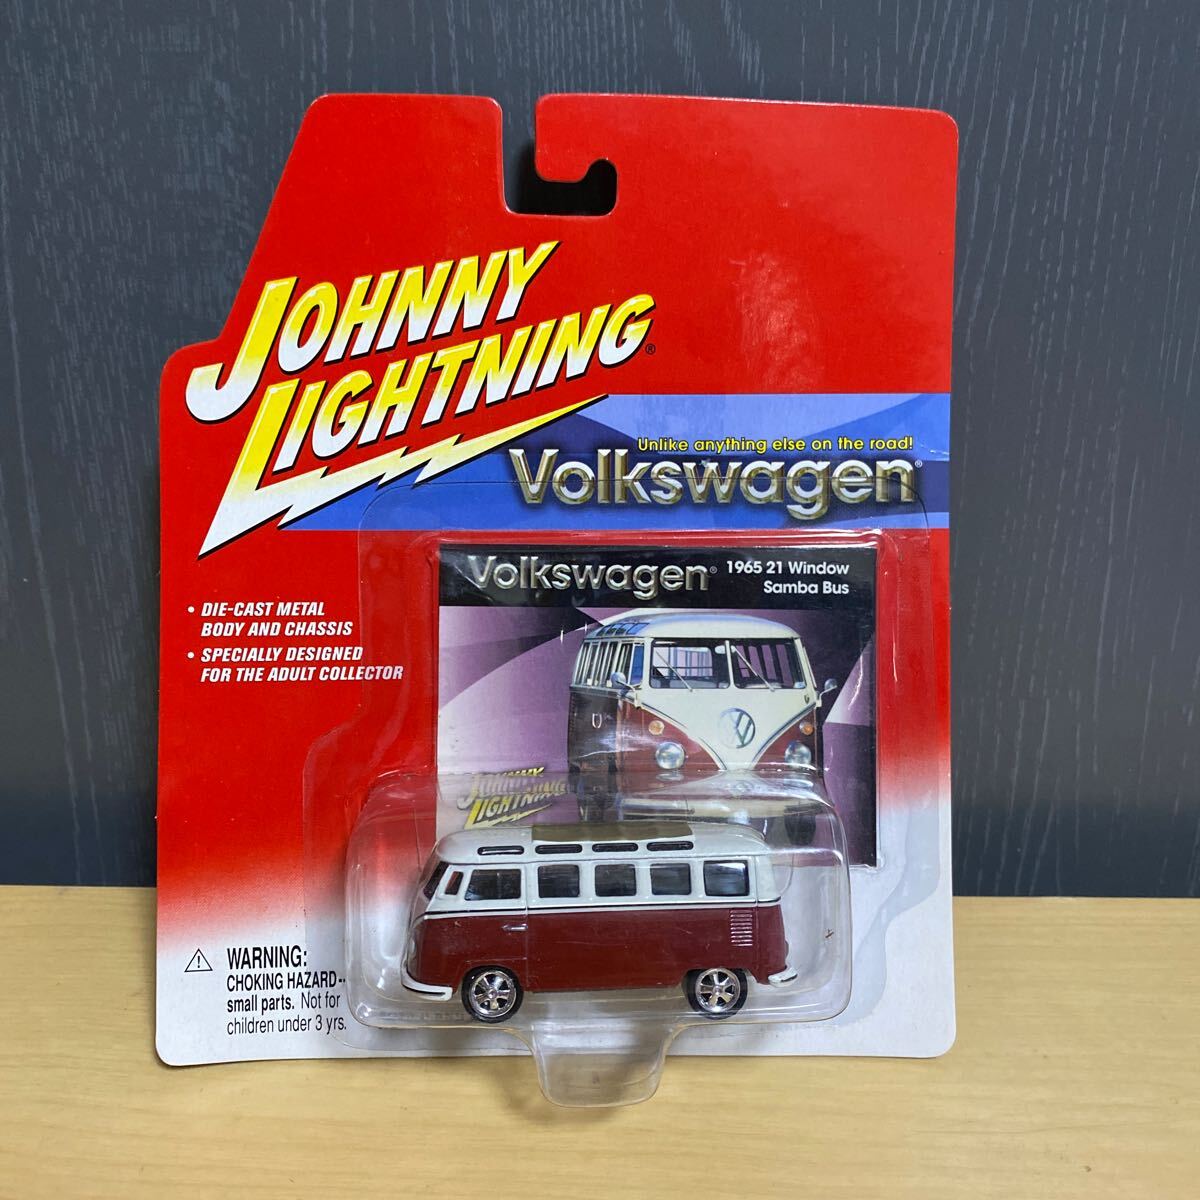  Johnny Lightning JOHNNY LIGHTNING 1965 21 Window Samba Bus red 